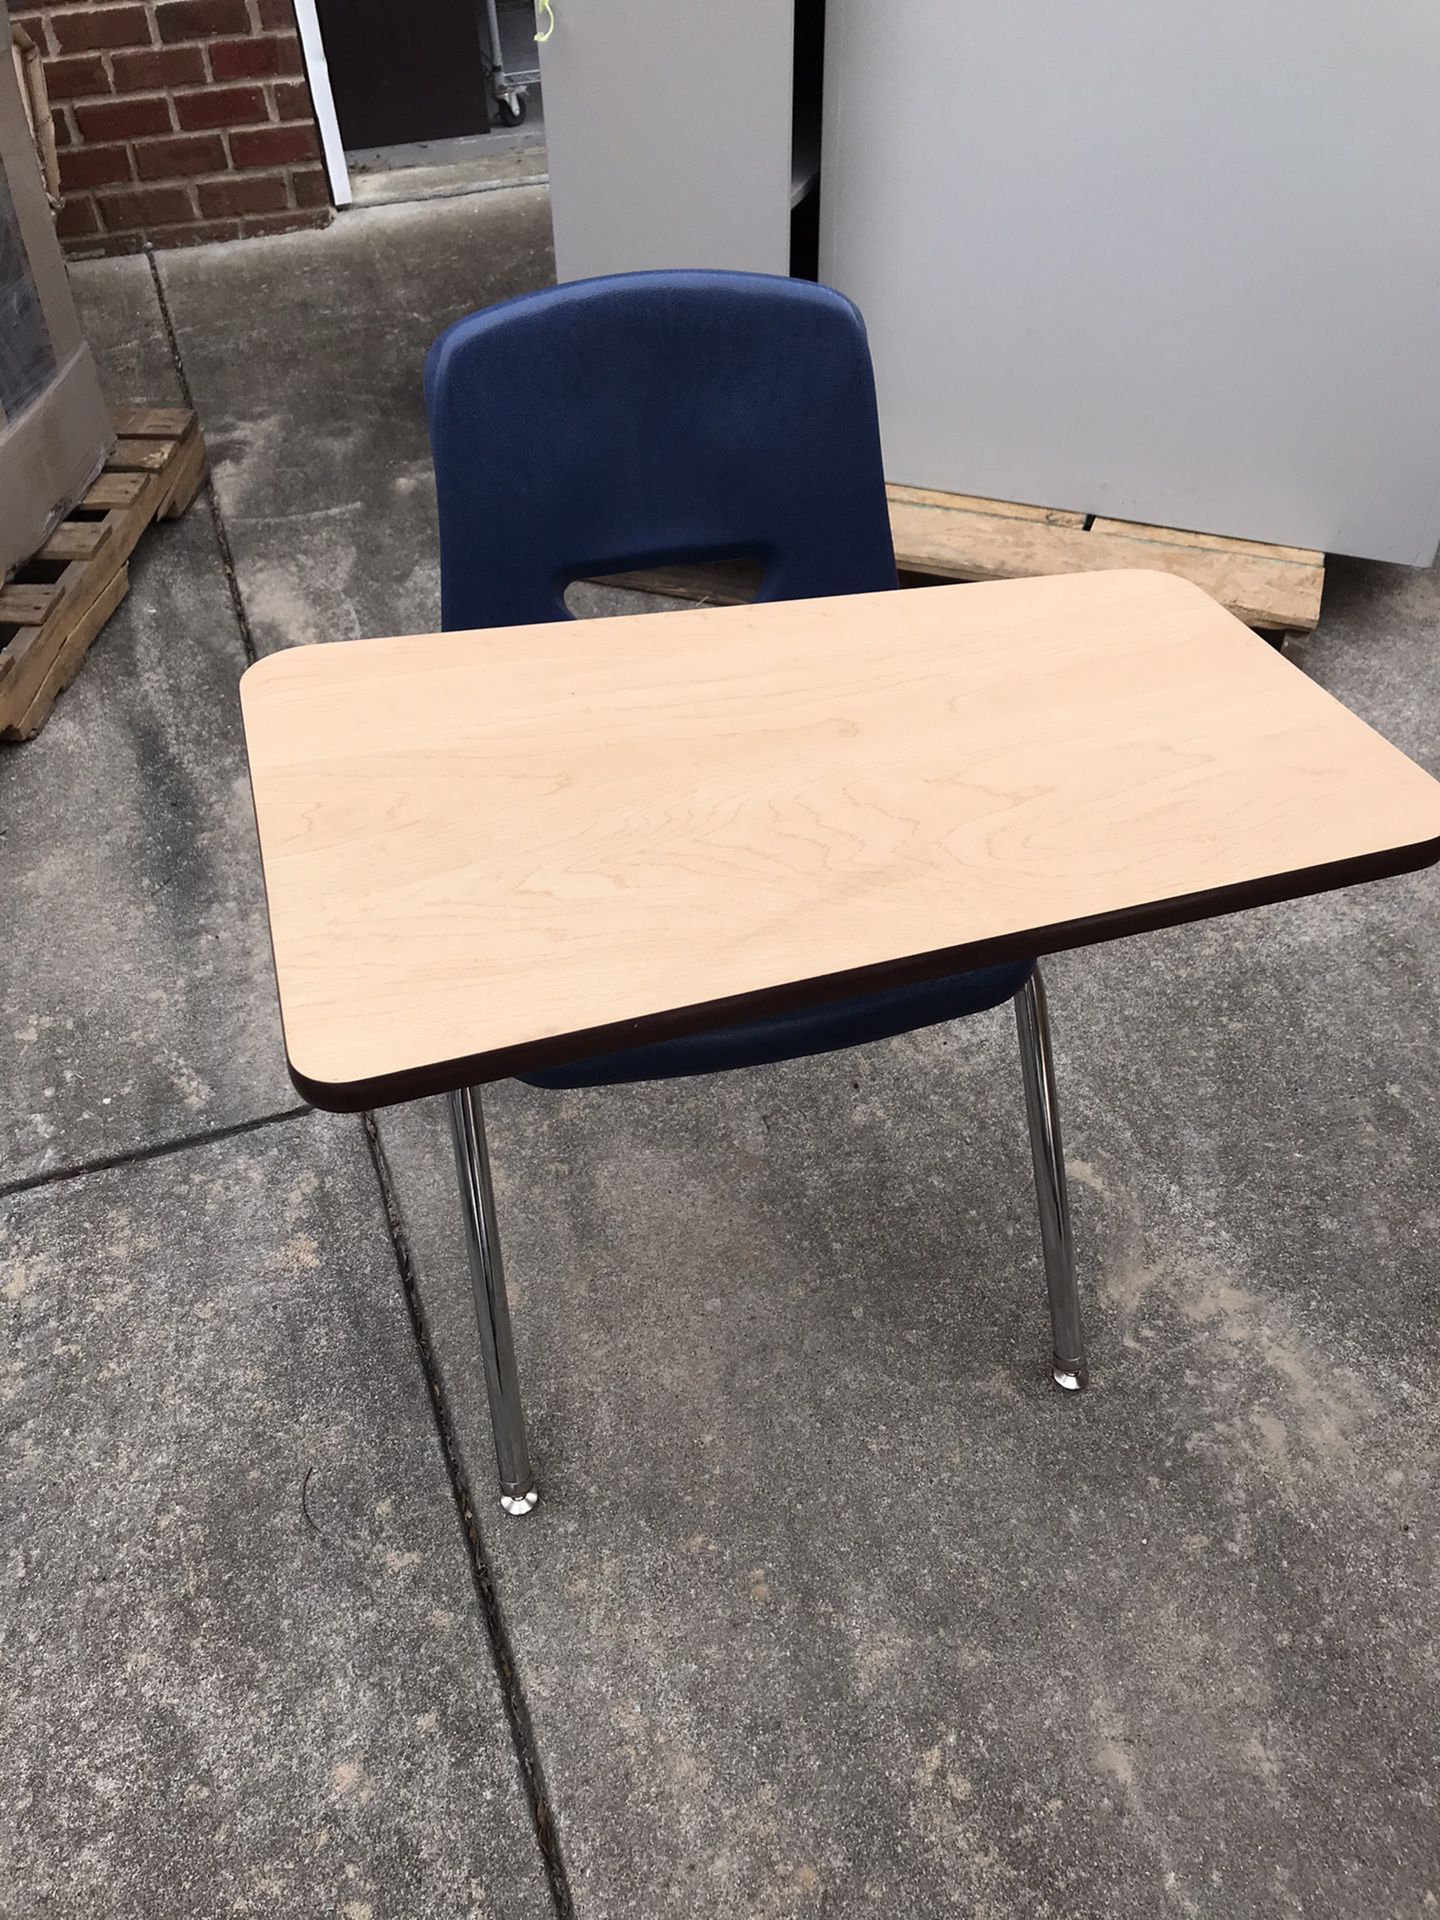 (3) new school desks in box!